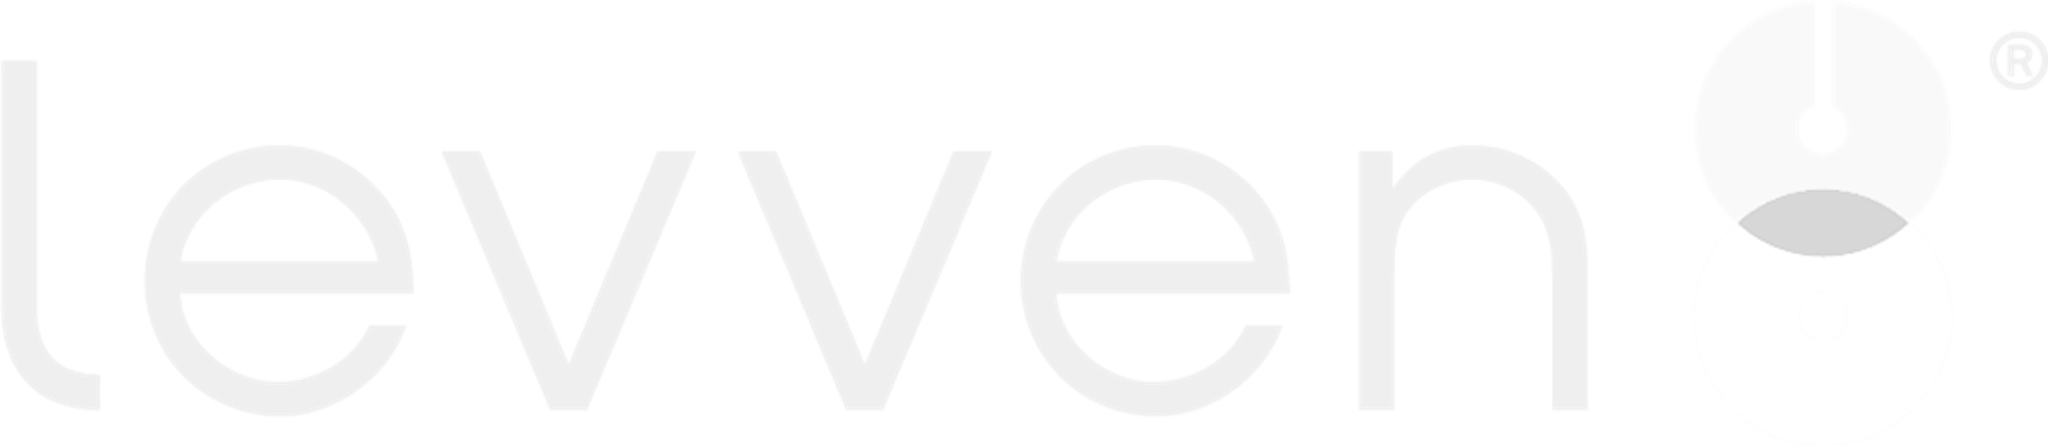 levven-logo-white (1)